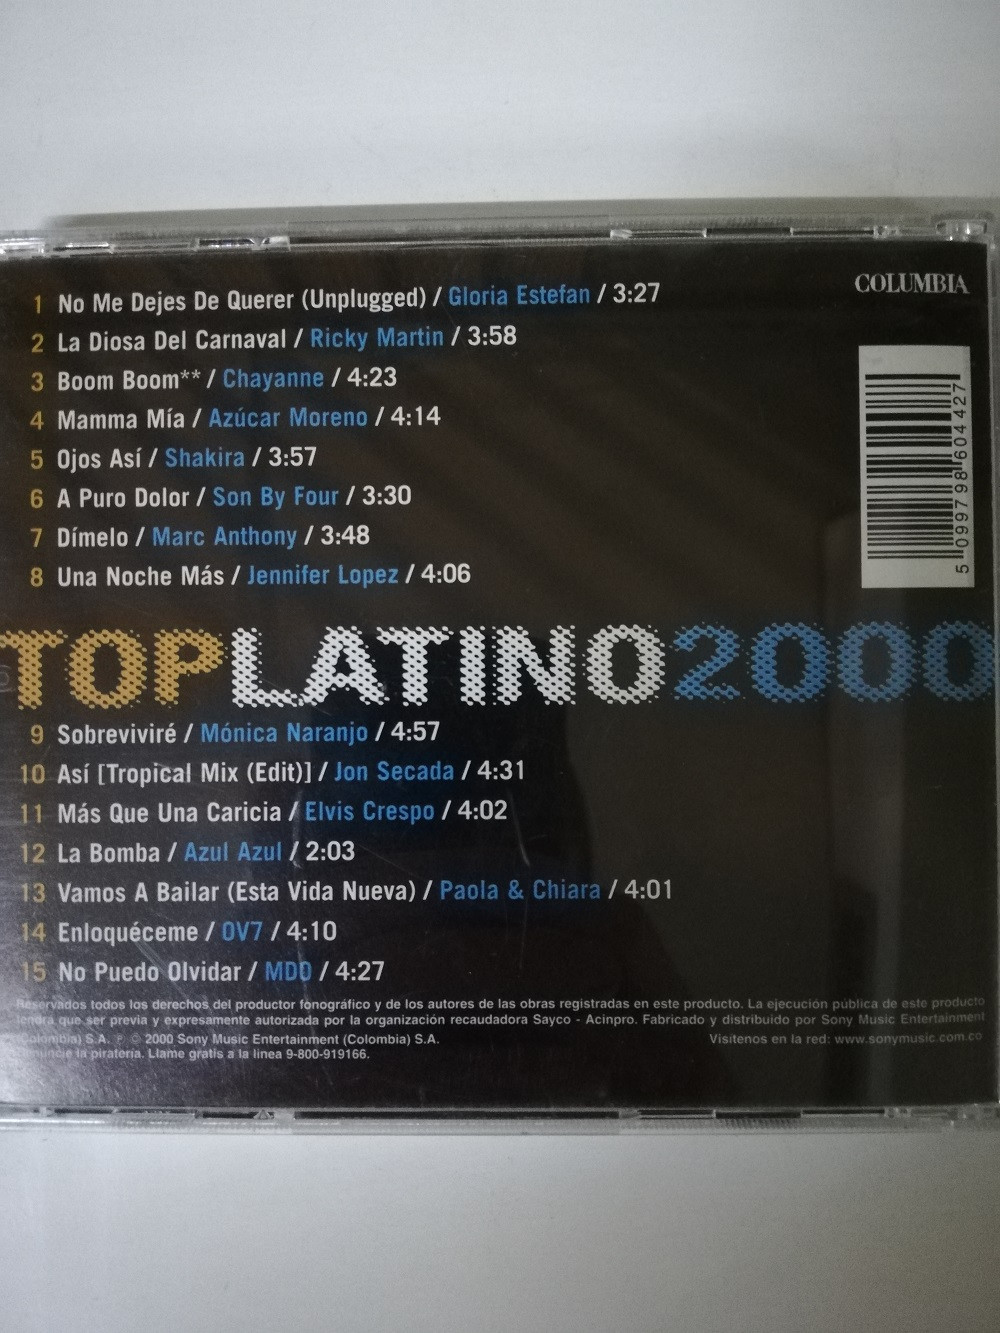 Imagen CD TOP LATINO - TOP LATINO 2000 2